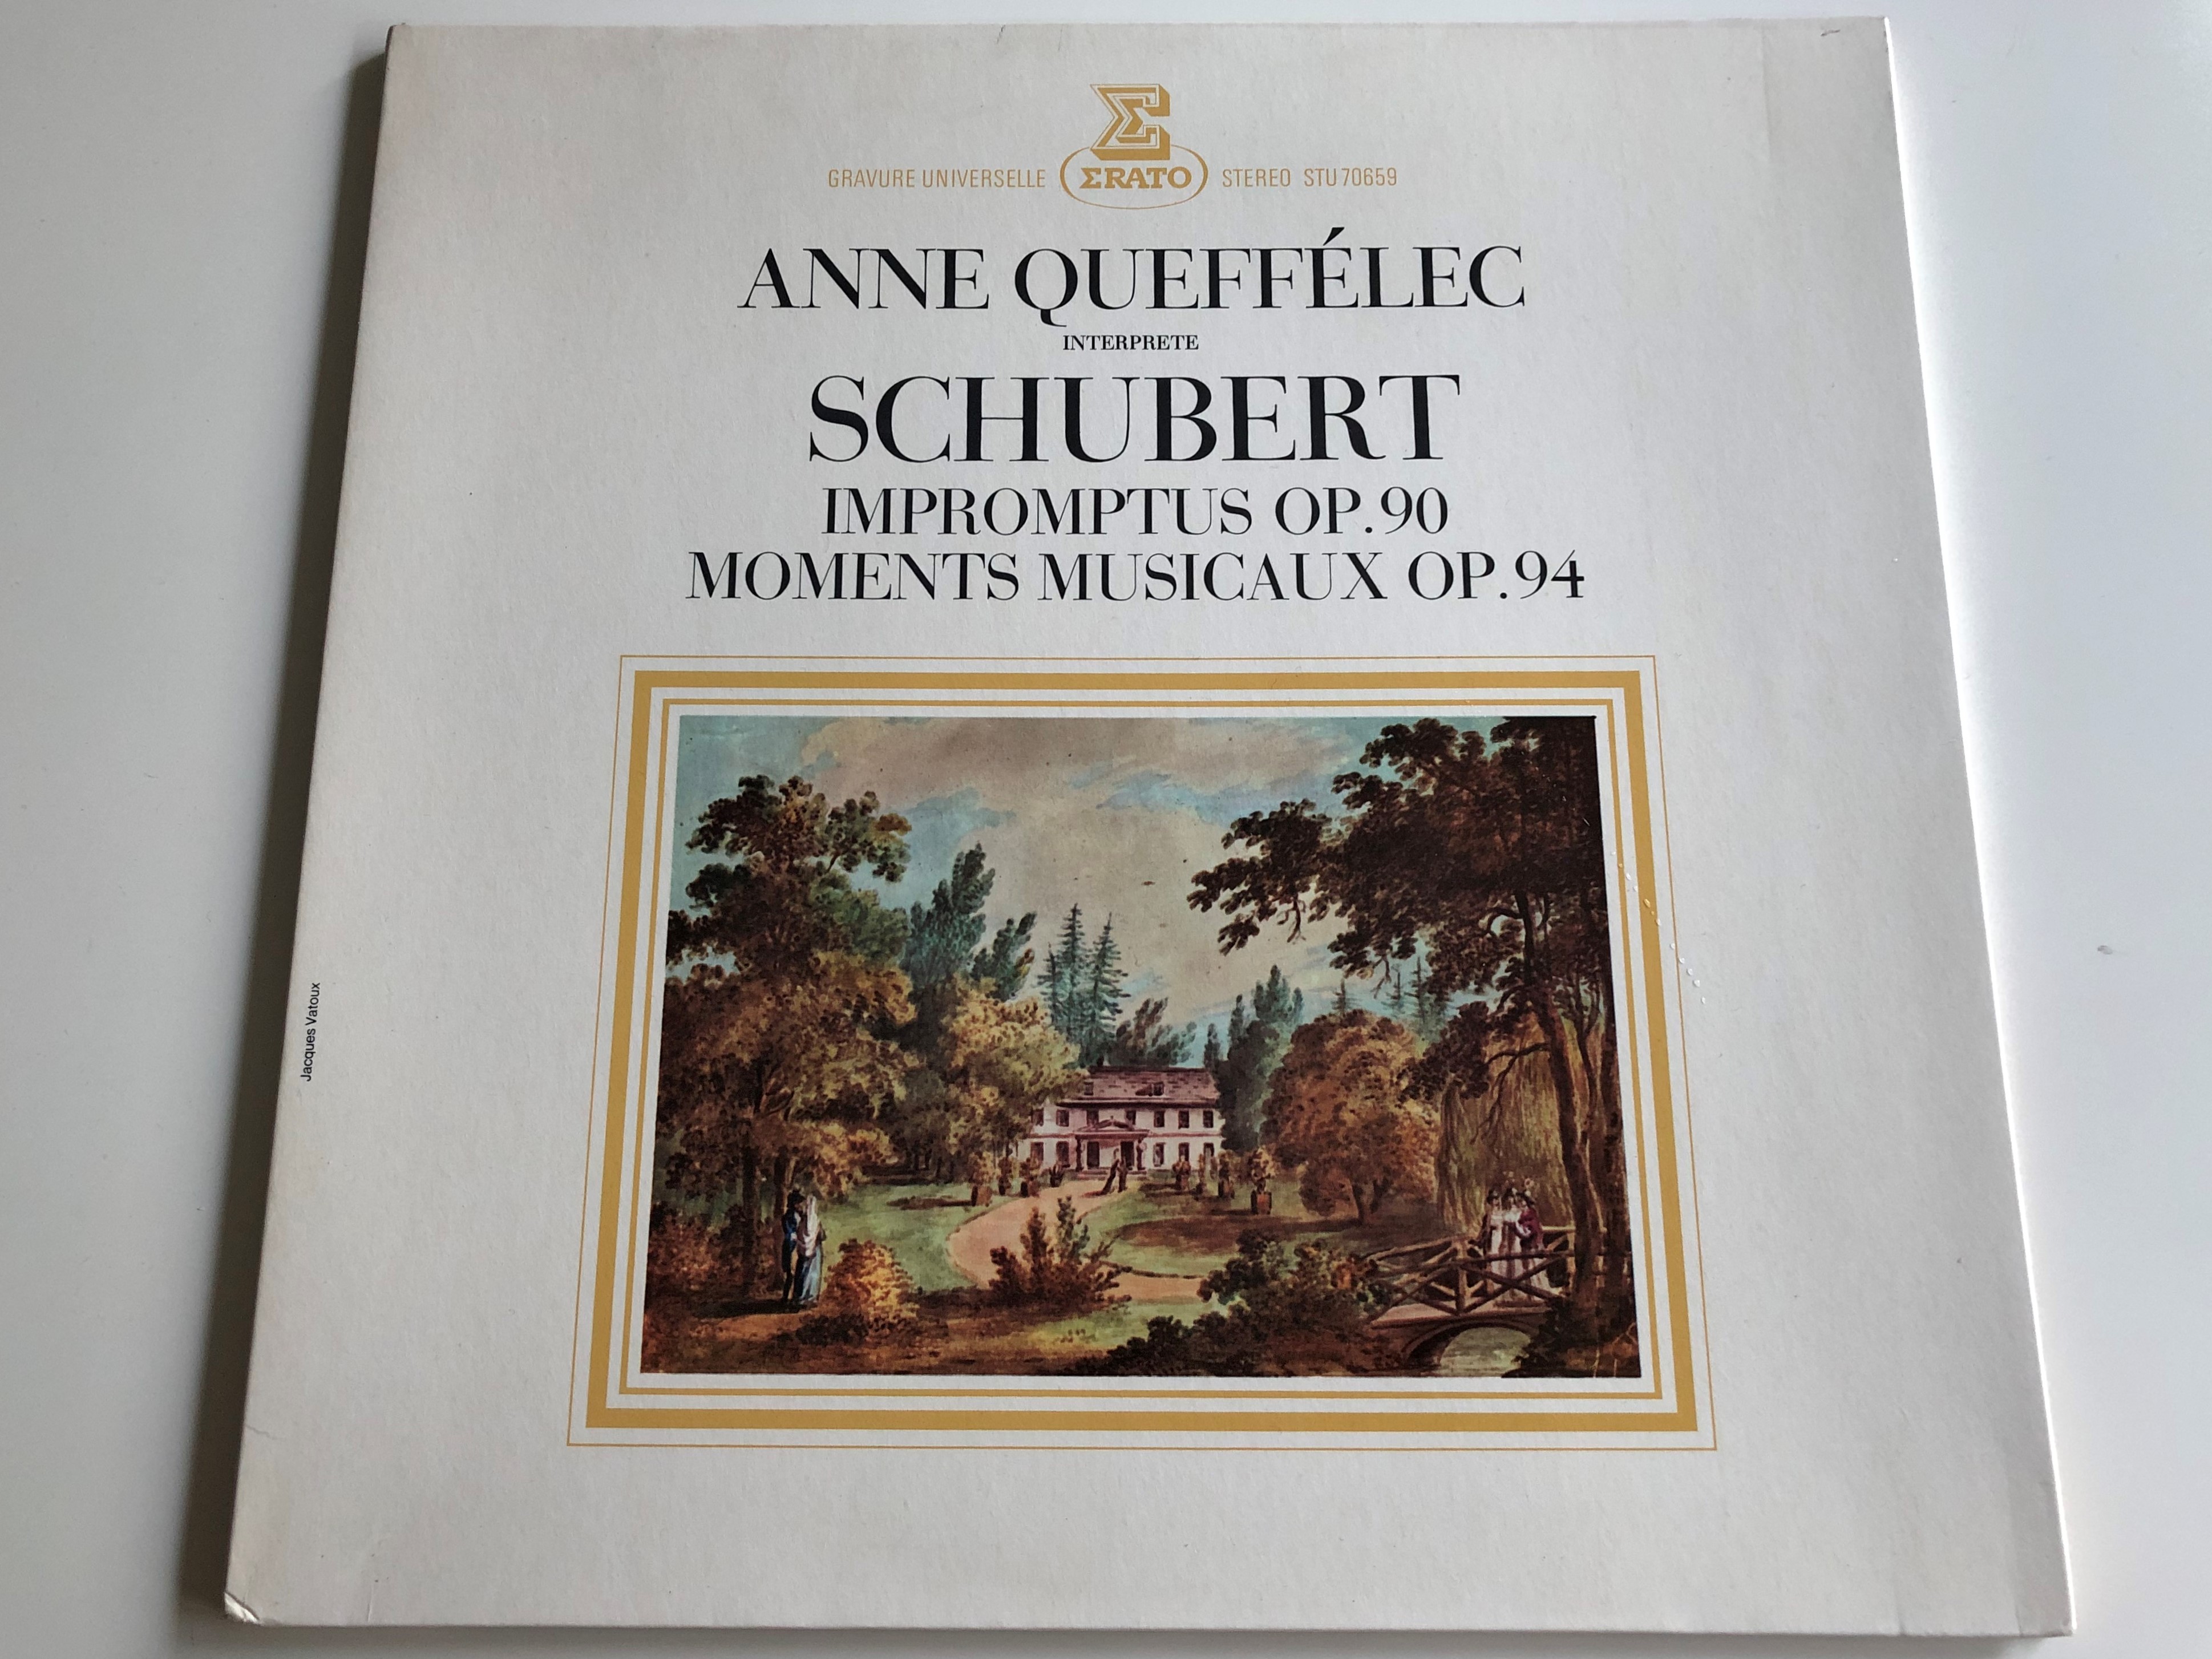 anne-queff-lec-interprete-schubert-impromptus-op.90-moments-musicaux-op.94-erato-lp-stereo-stu-70659-1-.jpg